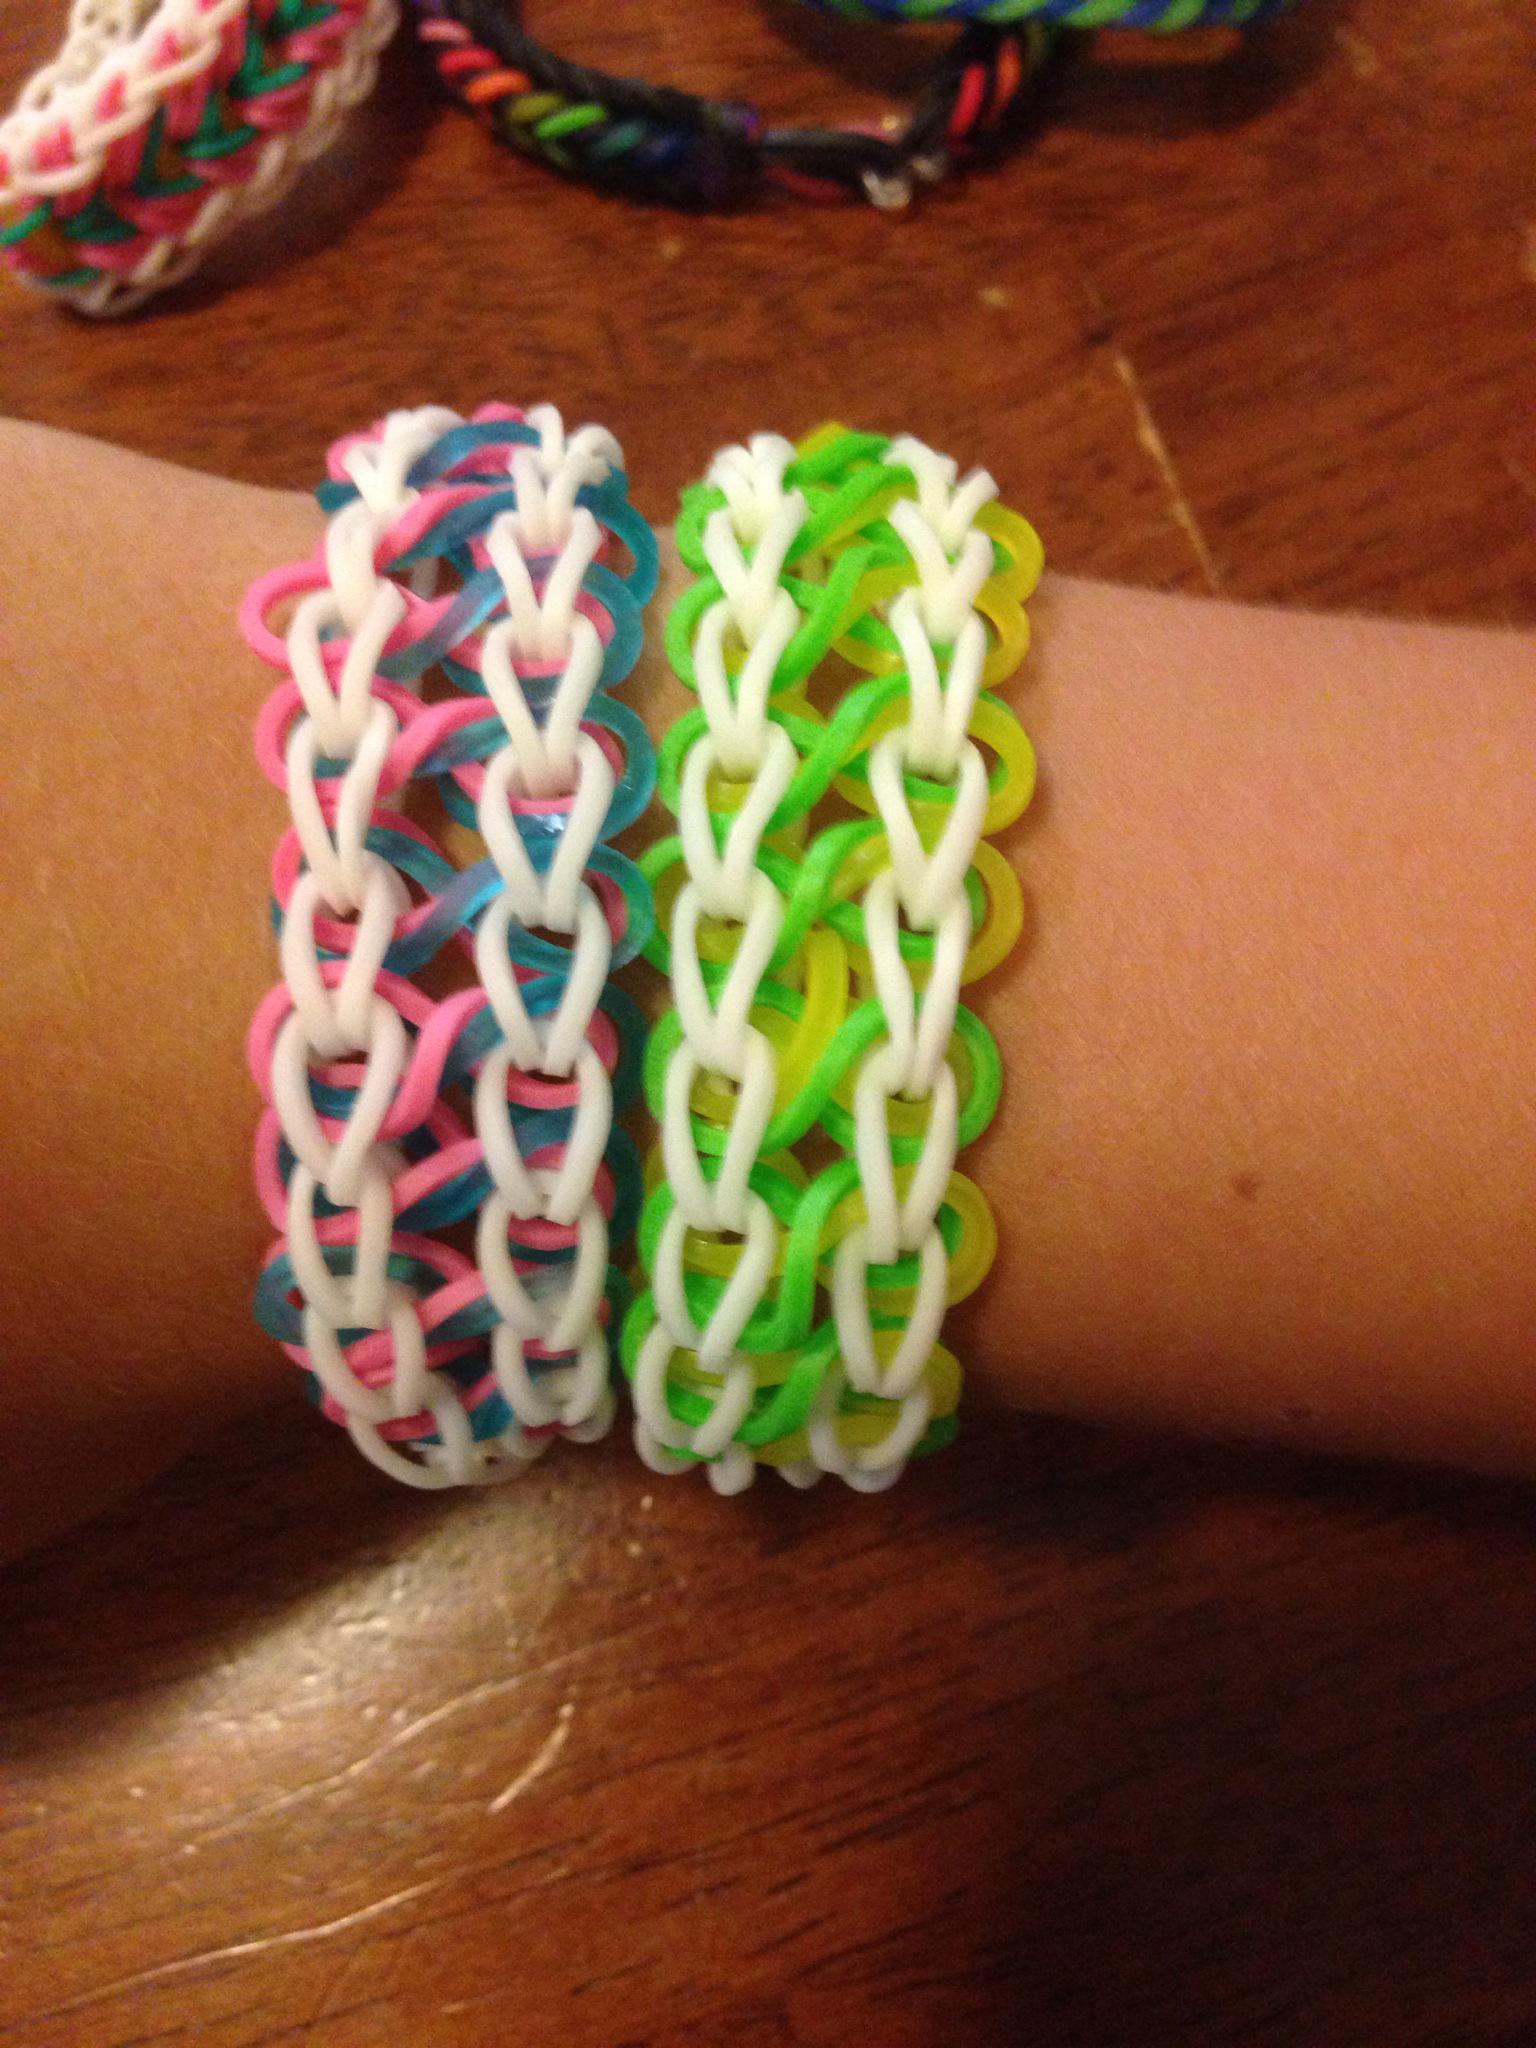 Rainbow Loom, Rubber Band Loom for Stretchy Friendship Bracelets -  Walmart.com